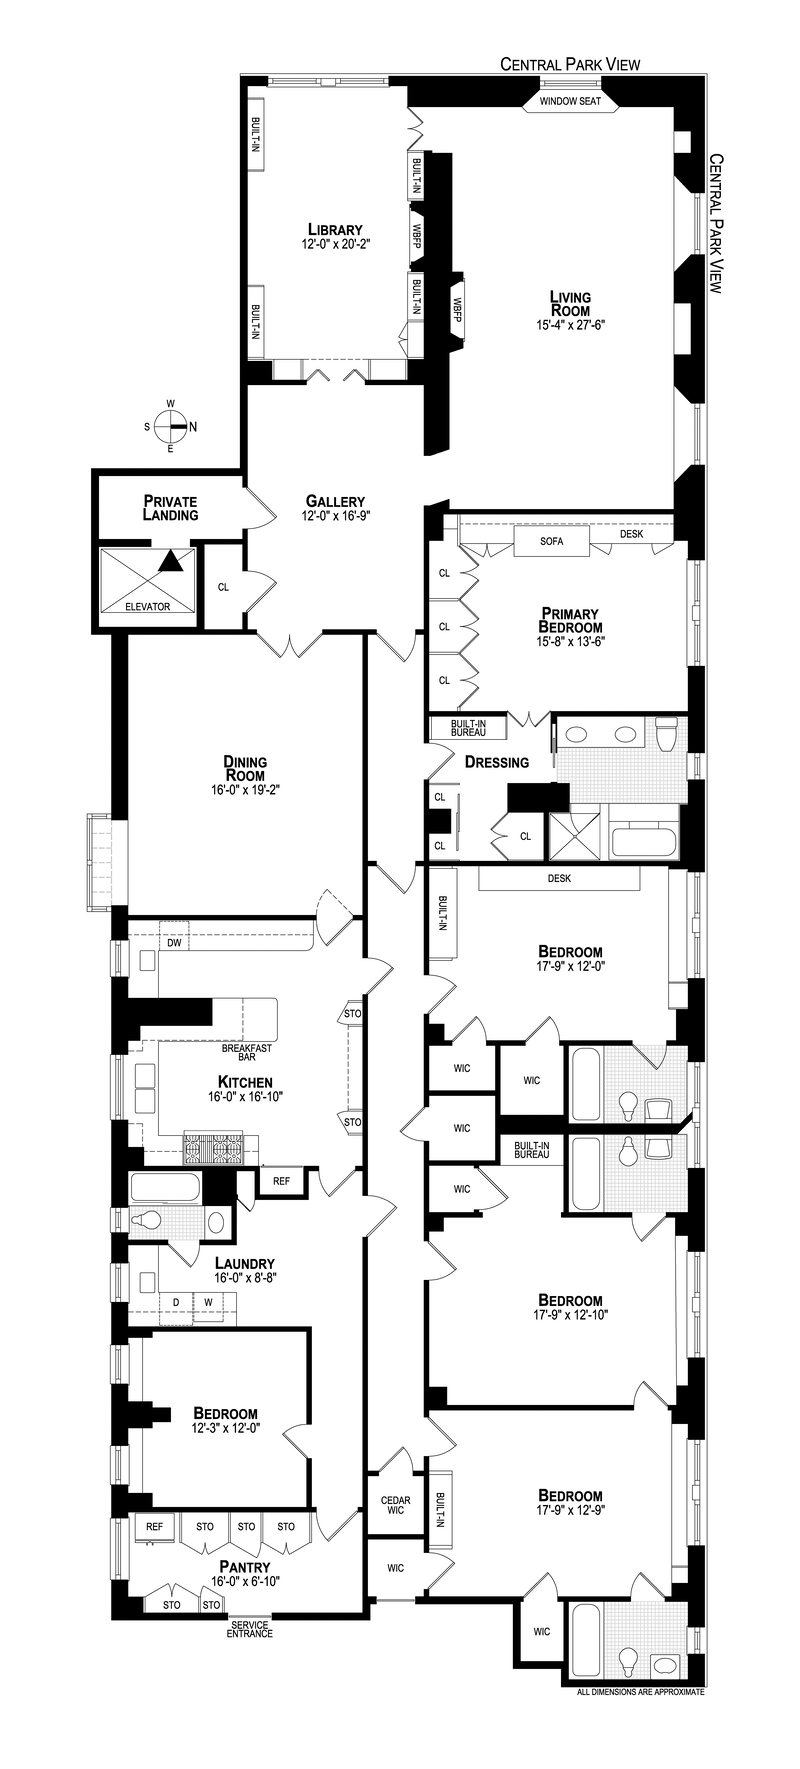 Floorplan for 1035 Fifth Avenue, 14C